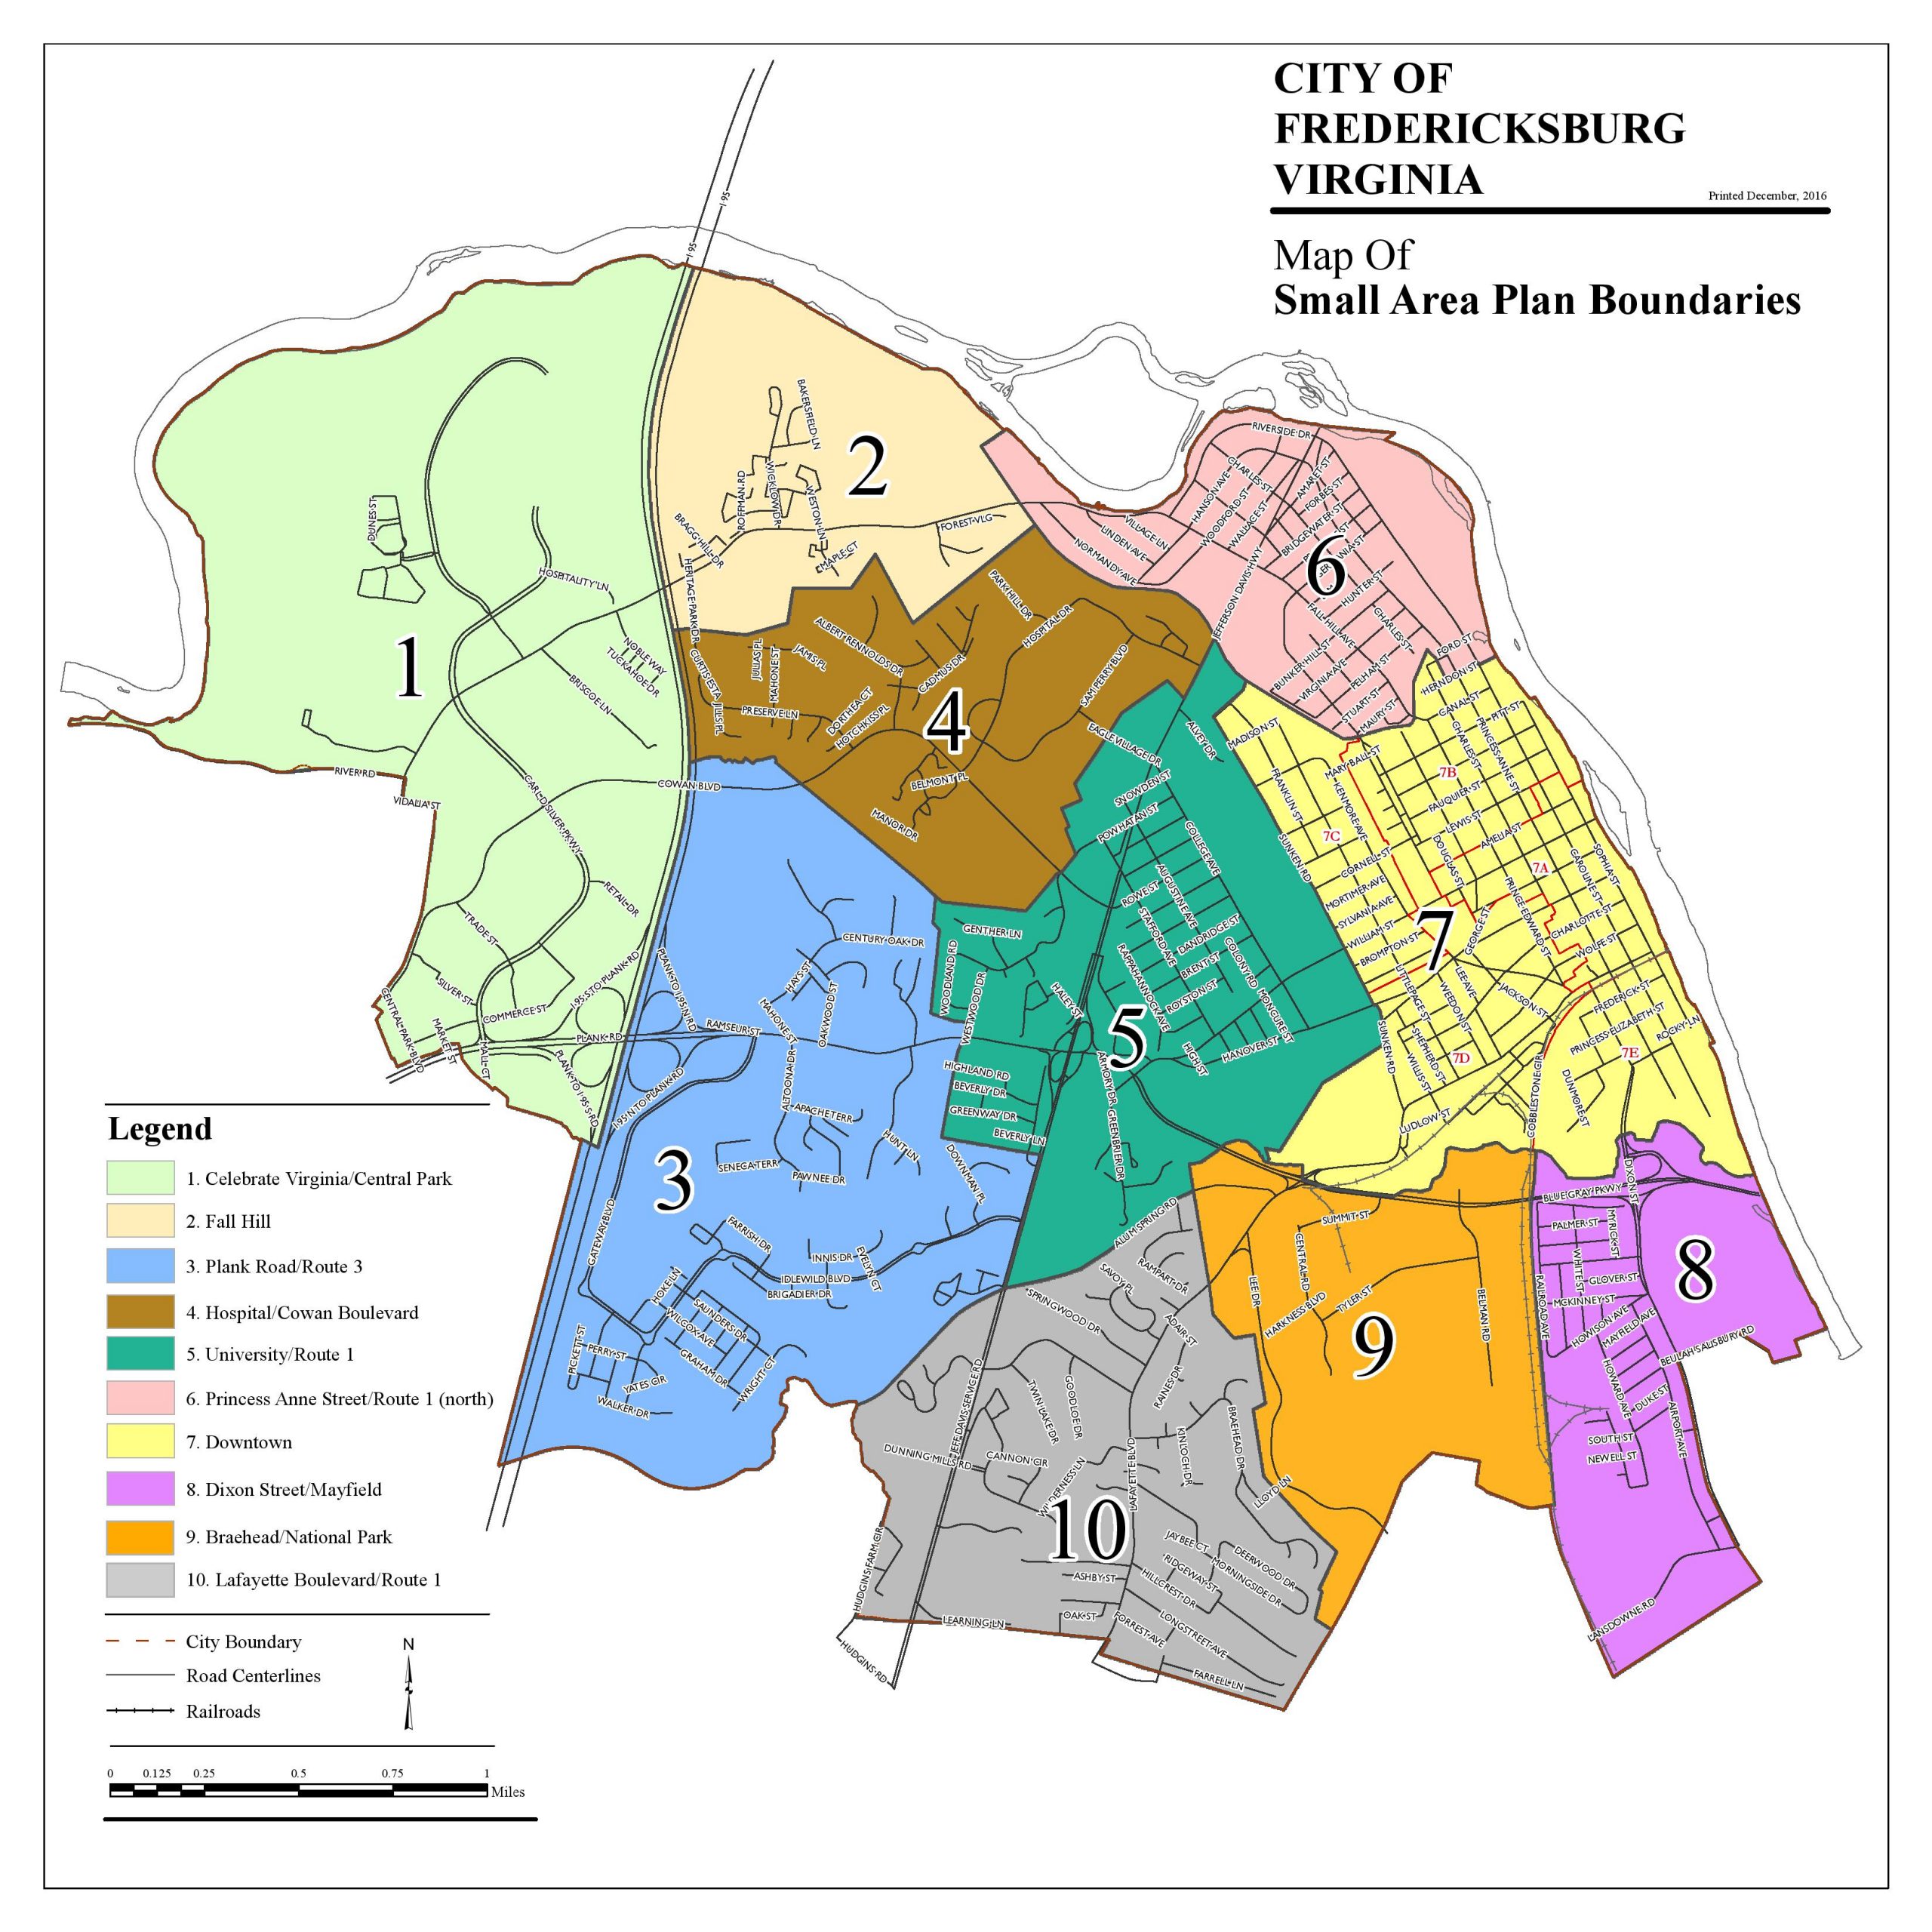 Fredericksburg taking proposals for area plans